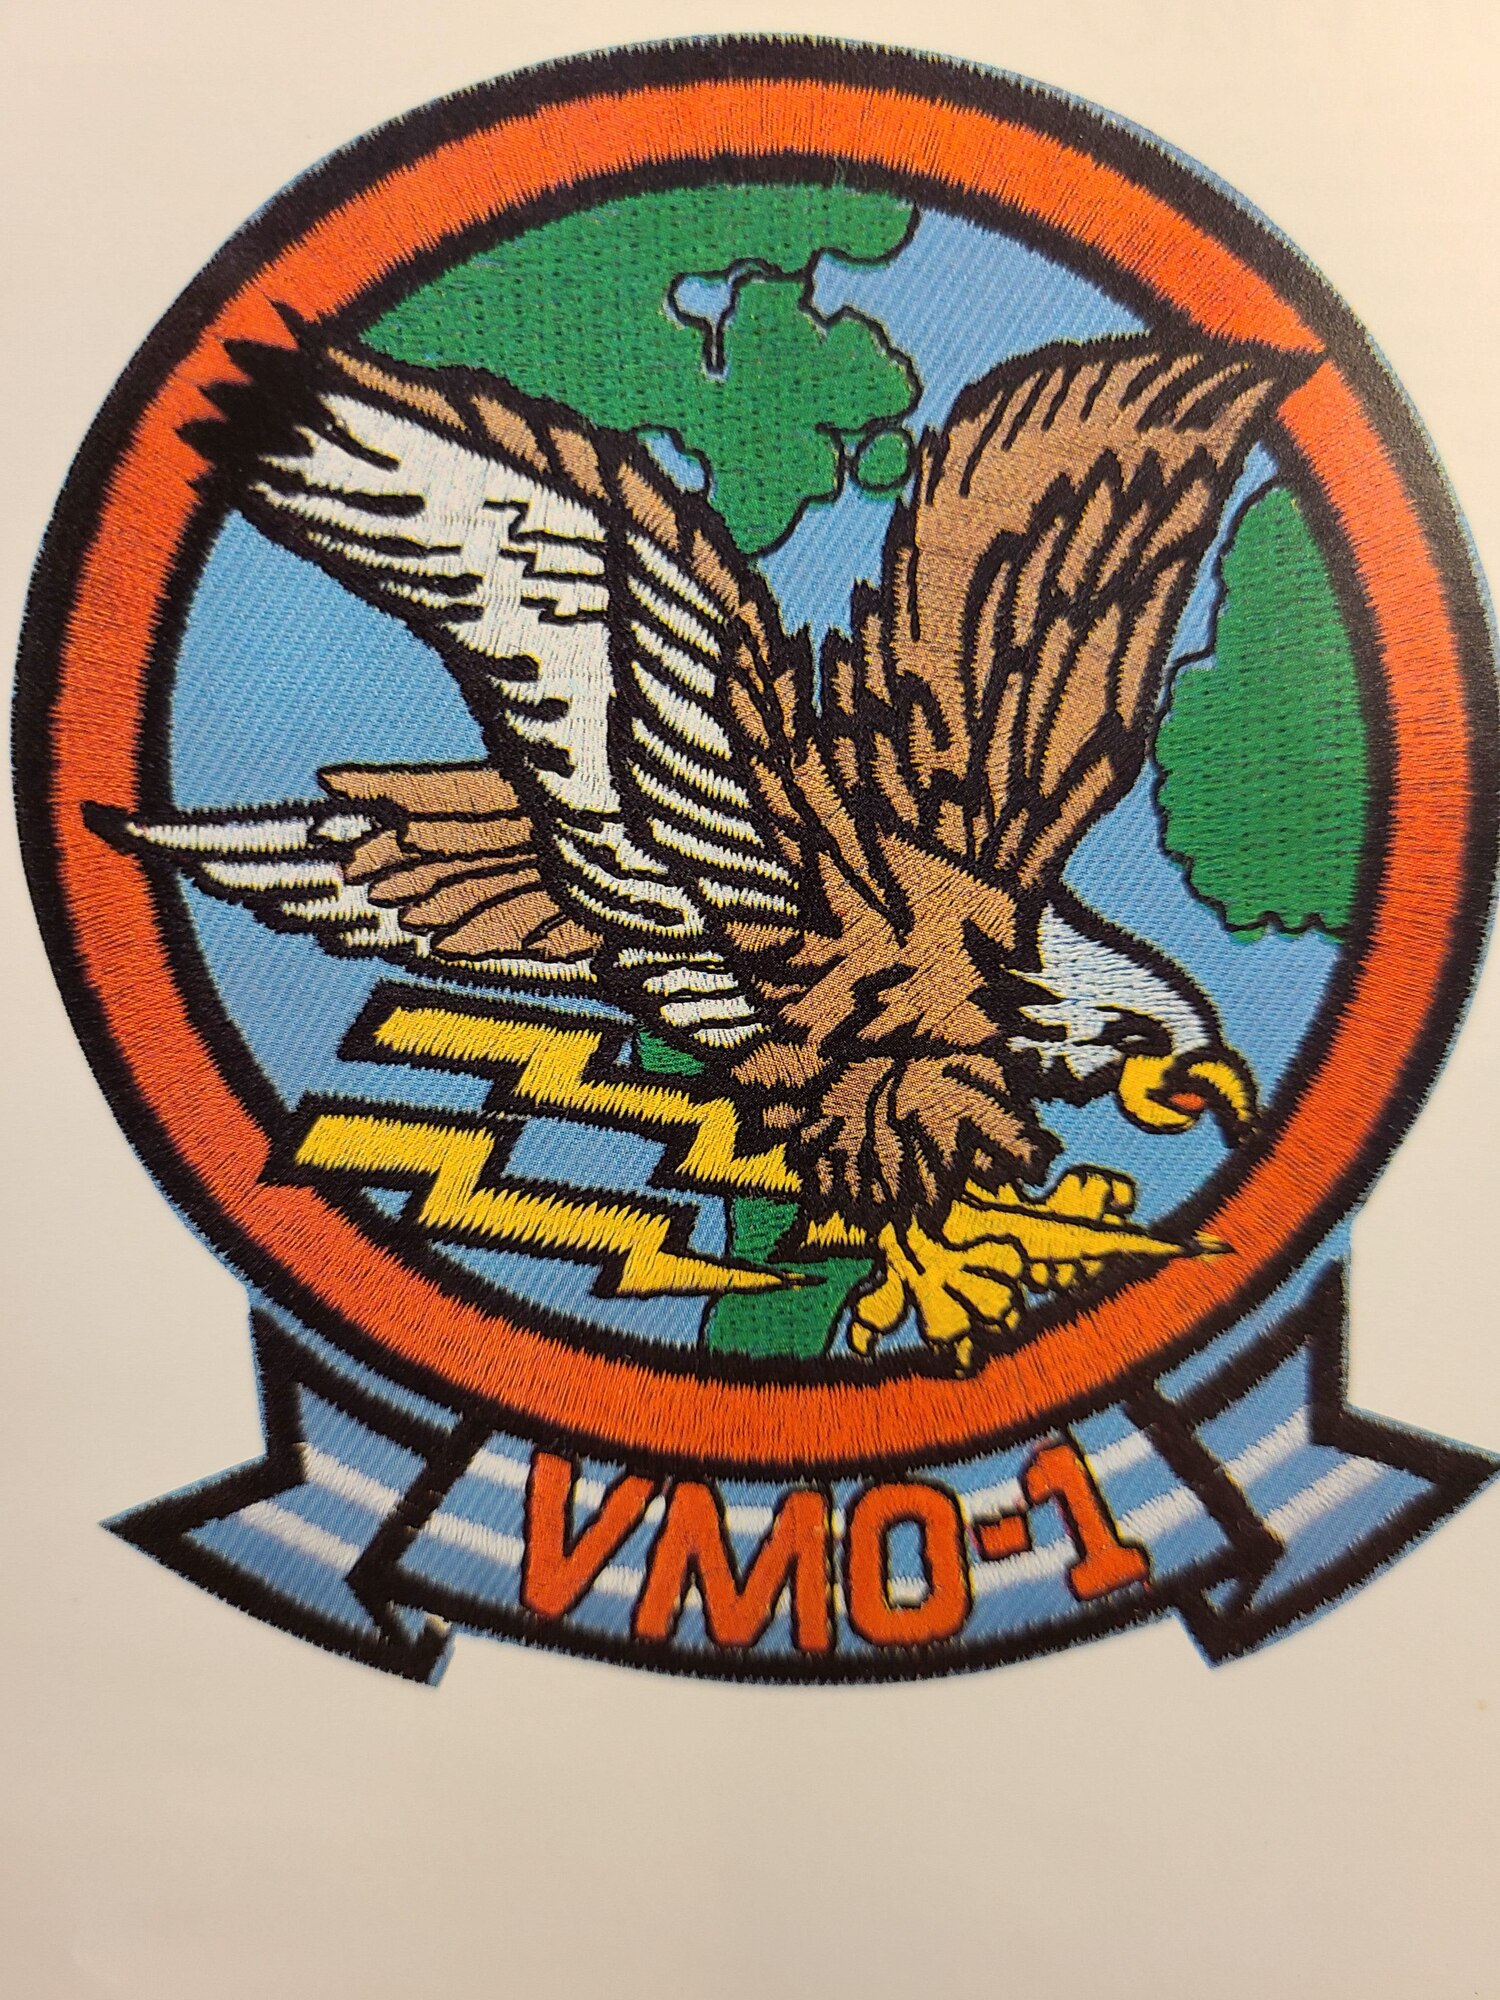 VMO-1 patch.